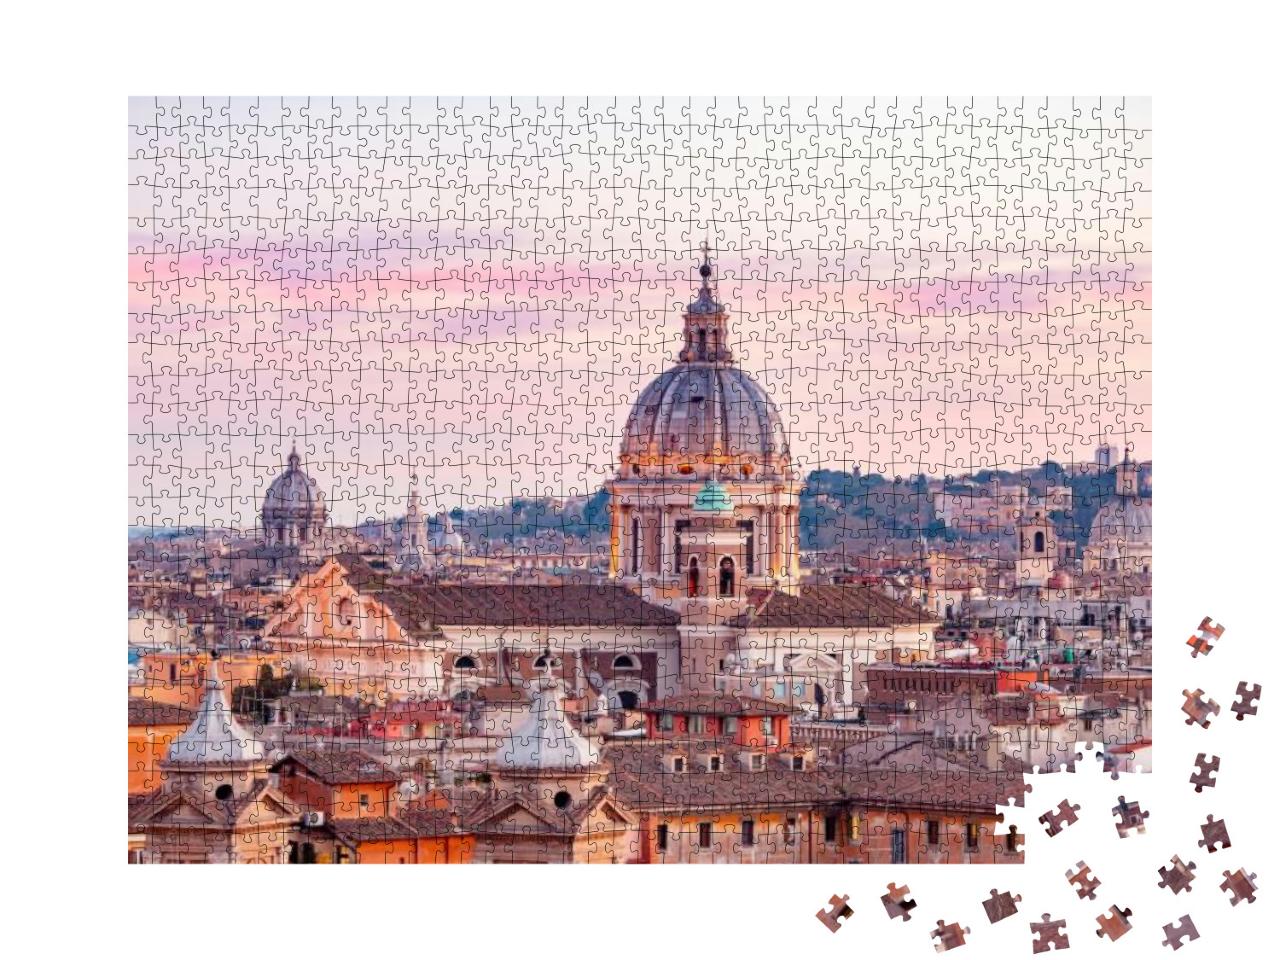 Puzzle 1000 Teile „Blick auf den Sonnenuntergang in Rom“